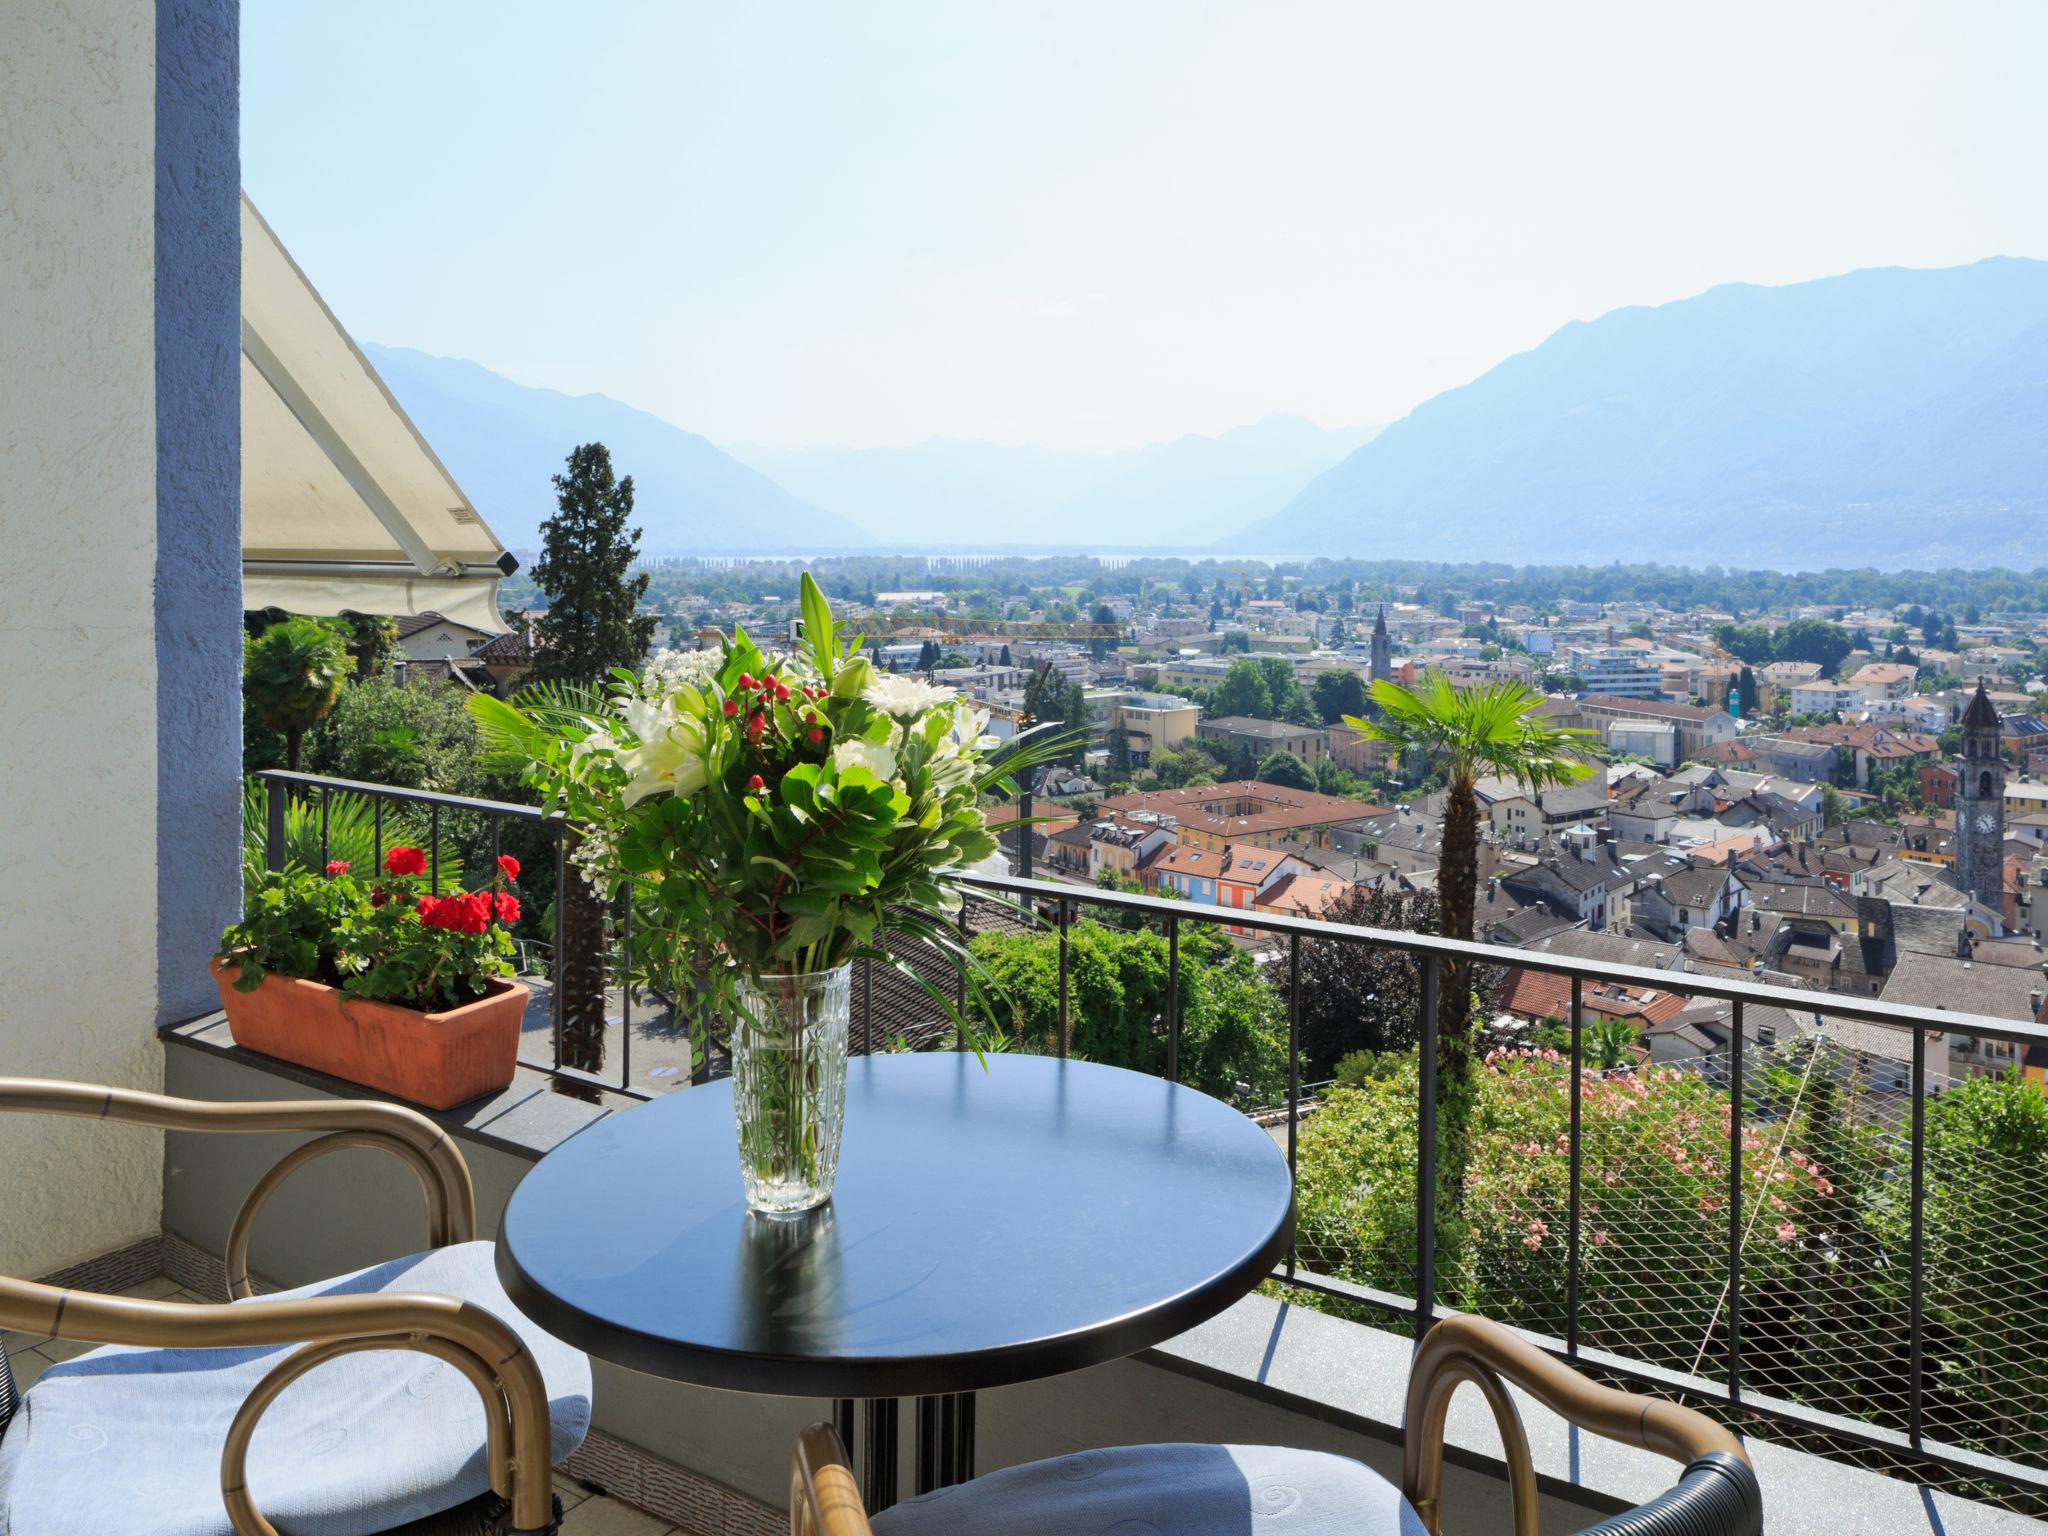 Foto 8 - Apartment in Ascona mit blick auf die berge